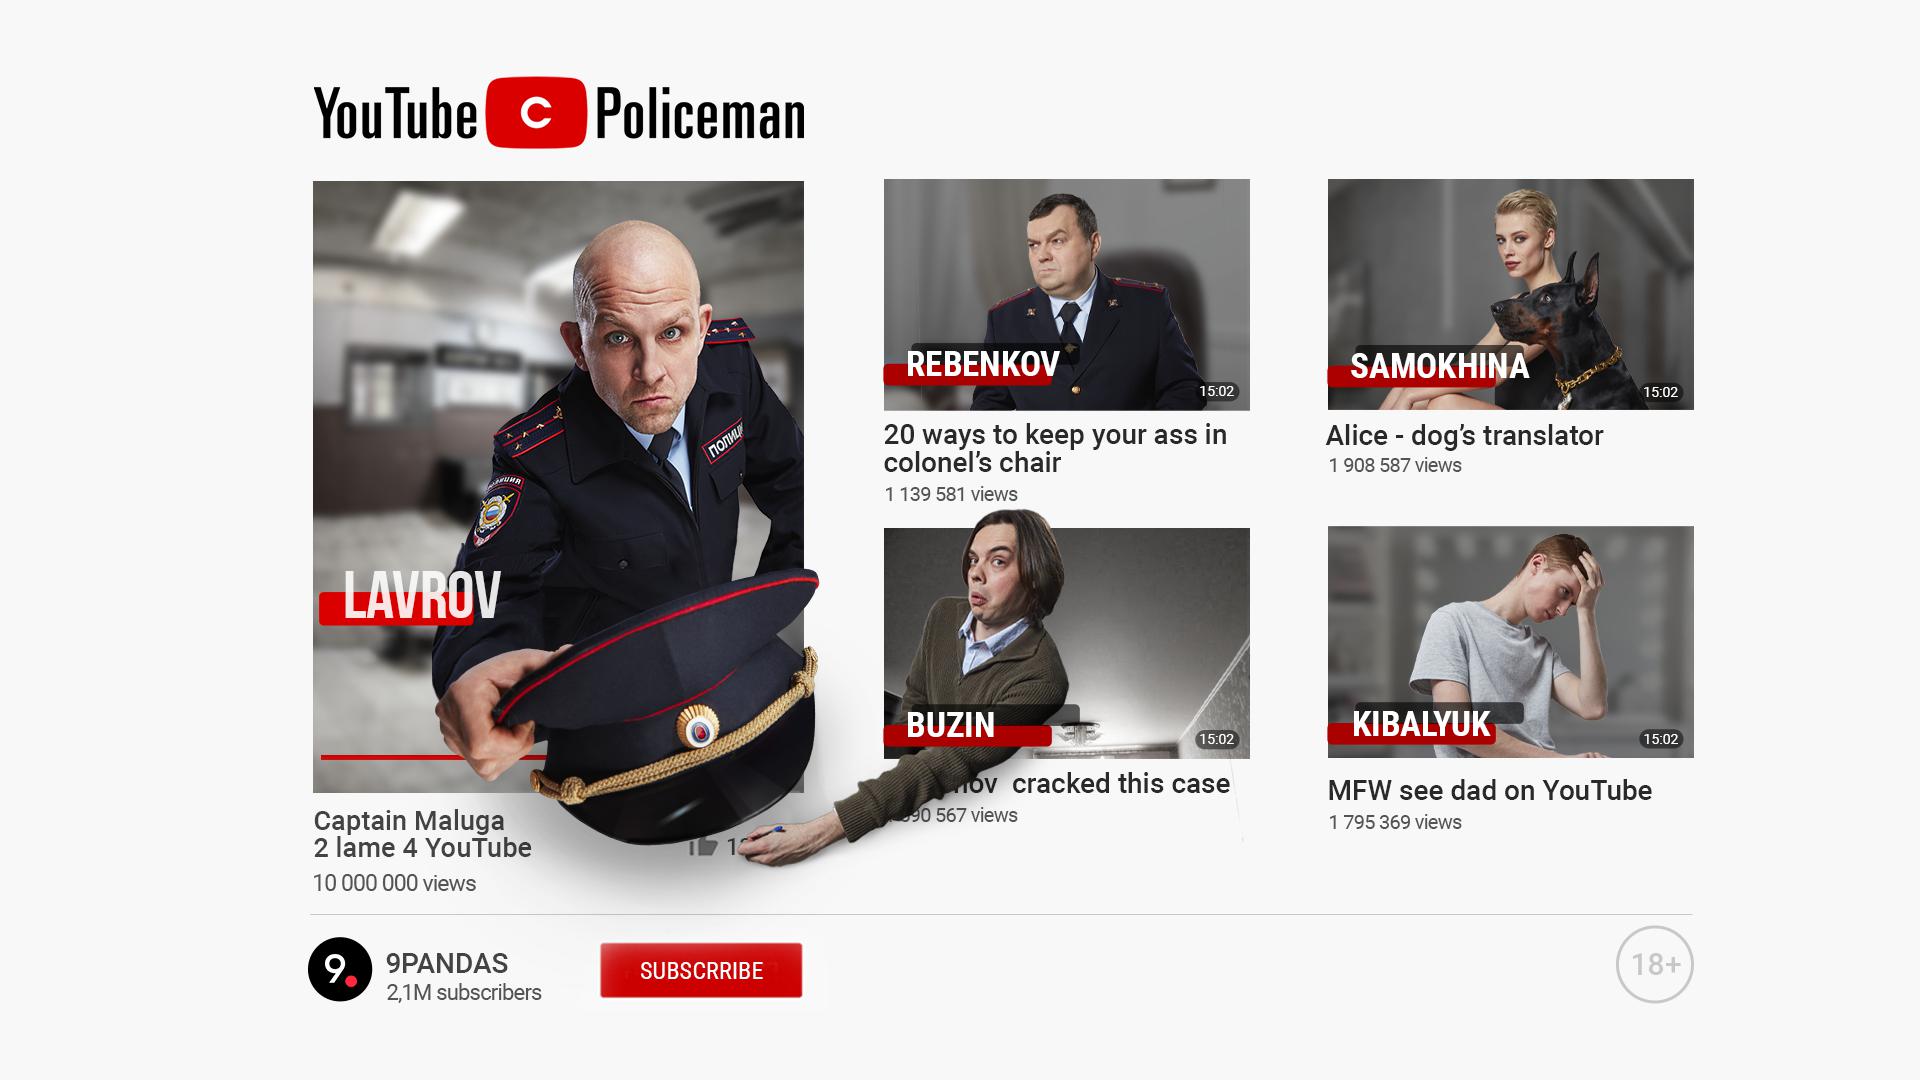 YouTube Policeman